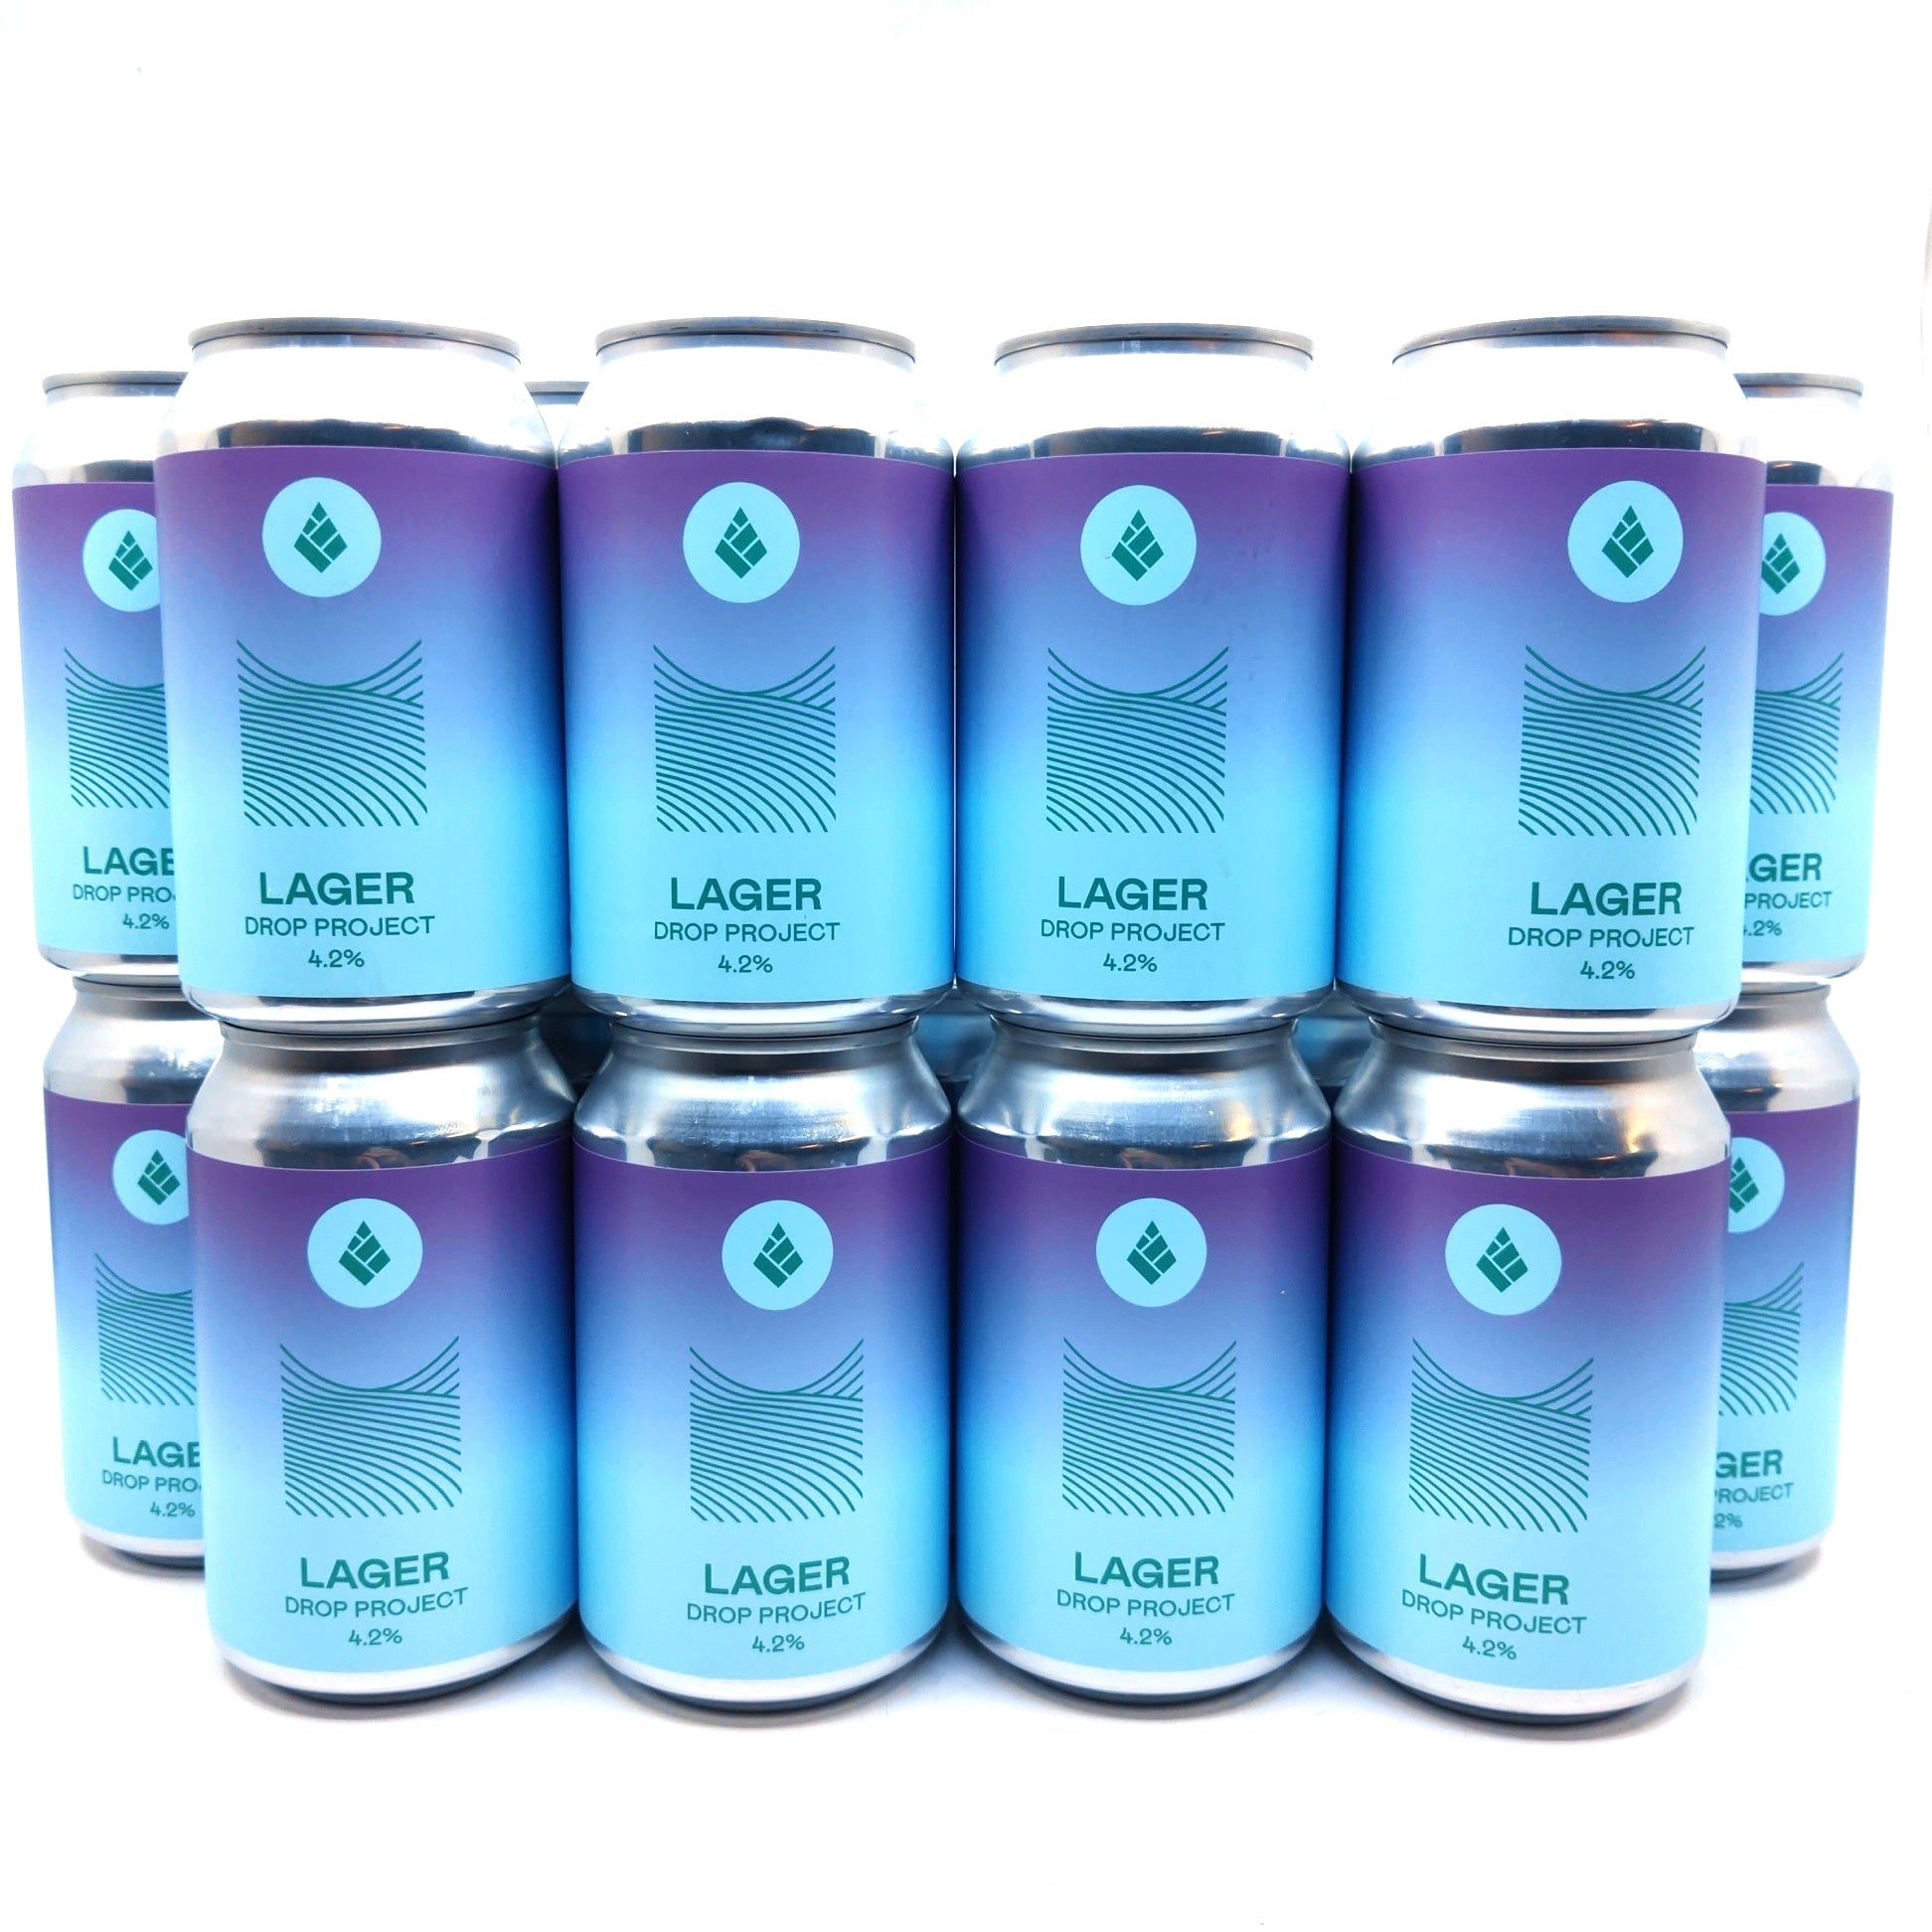 Drop Project Lager 4.2% CASE (24 x 330ml cans)-Hop Burns & Black